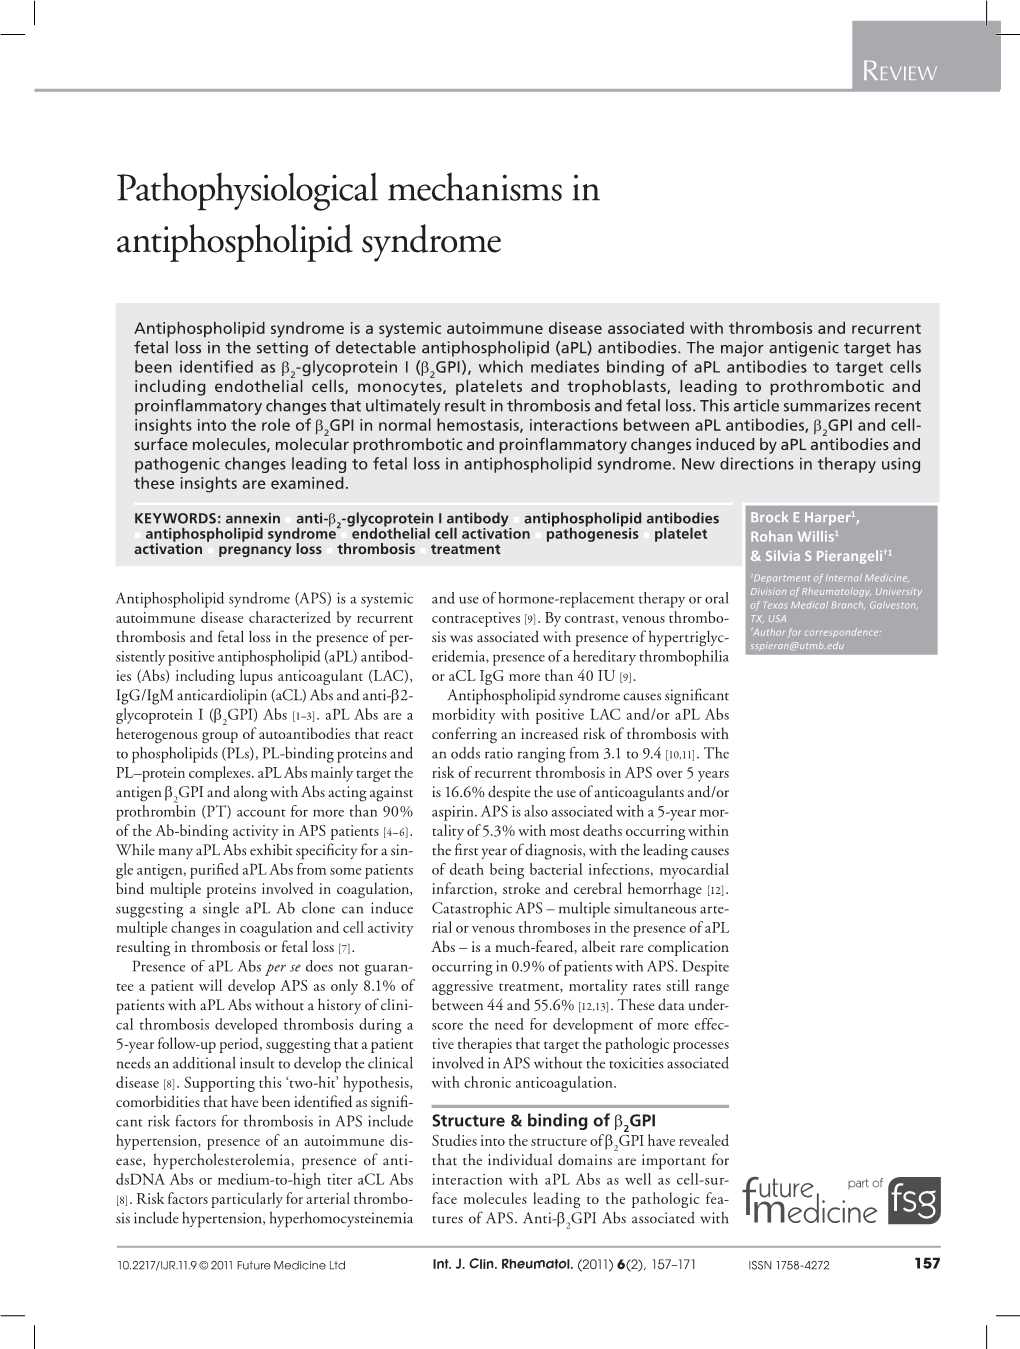 Pathophysiological Mechanisms in Antiphospholipid Syndrome